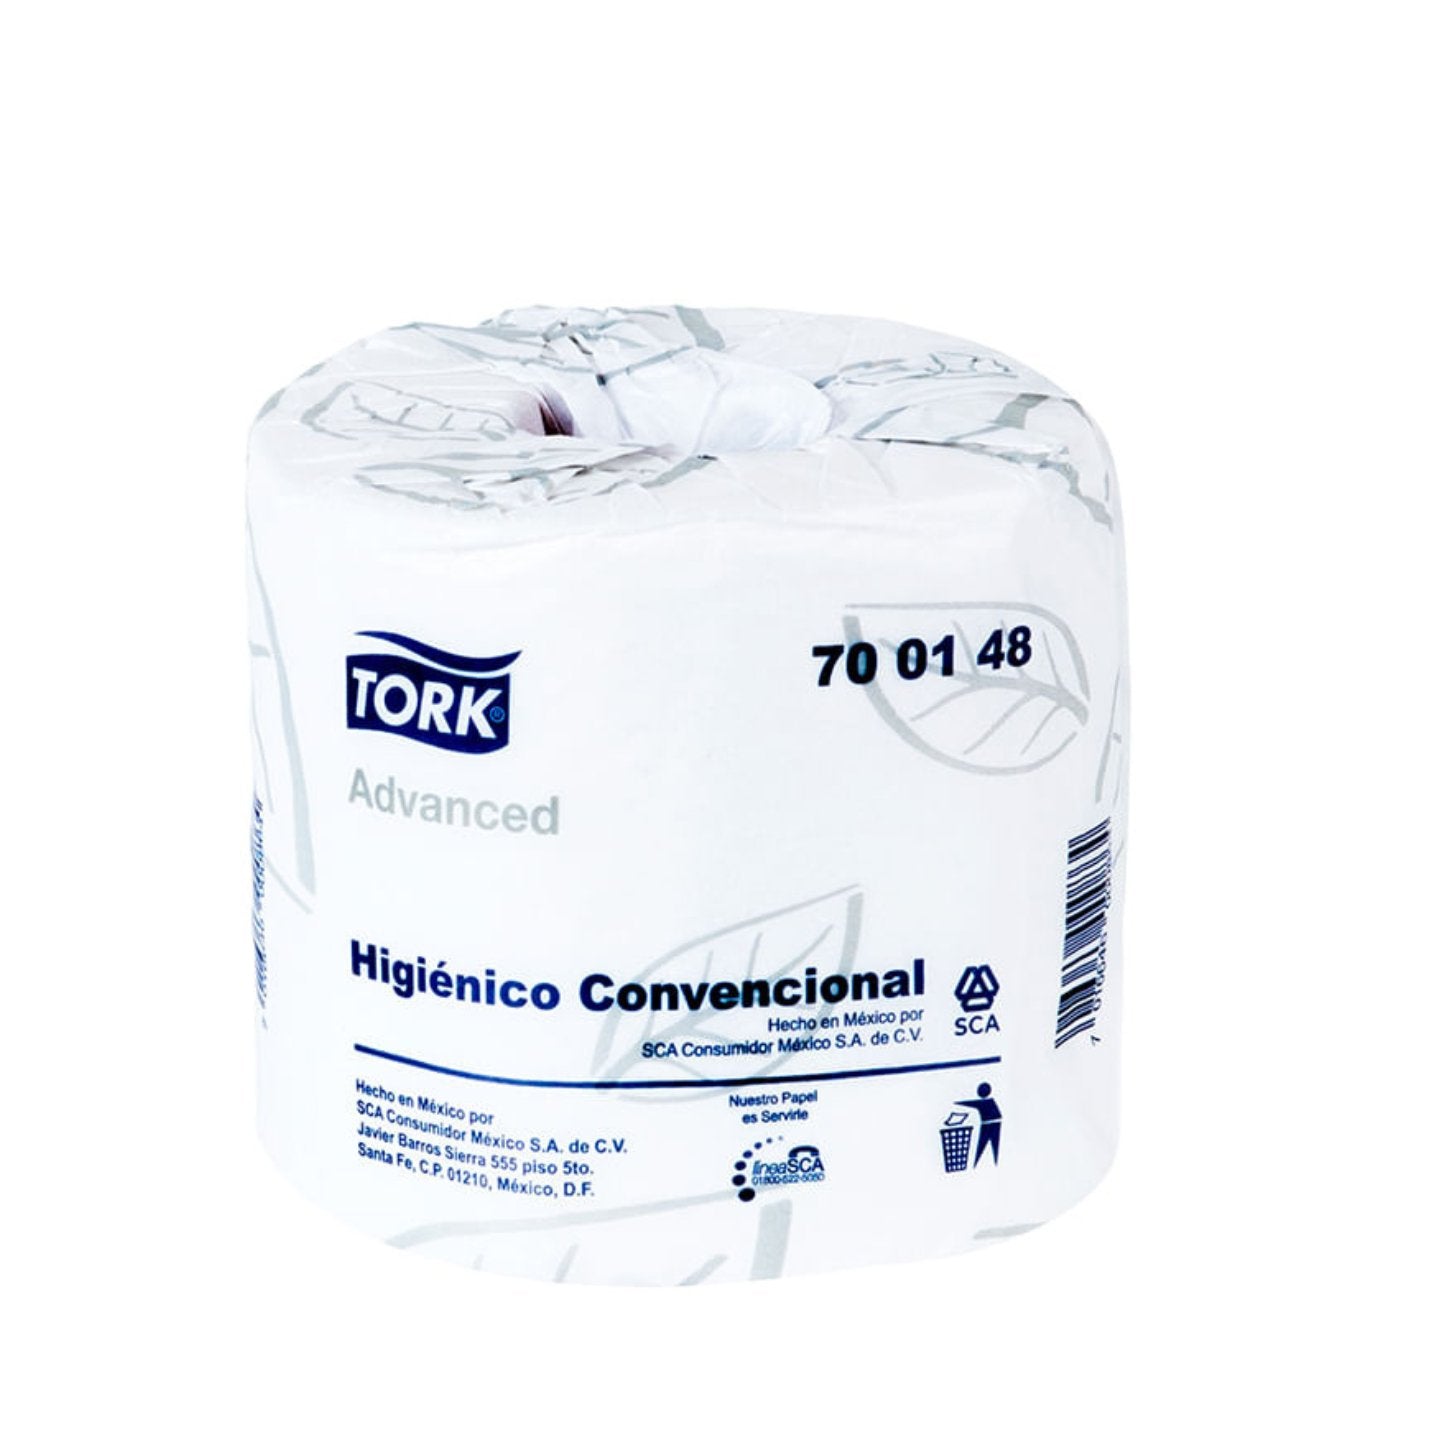 Tork® Higiénico Tradicional Advanced 48 Paqs / 500 hjs (700148) - Karlan ¡Marca la Limpieza!700148